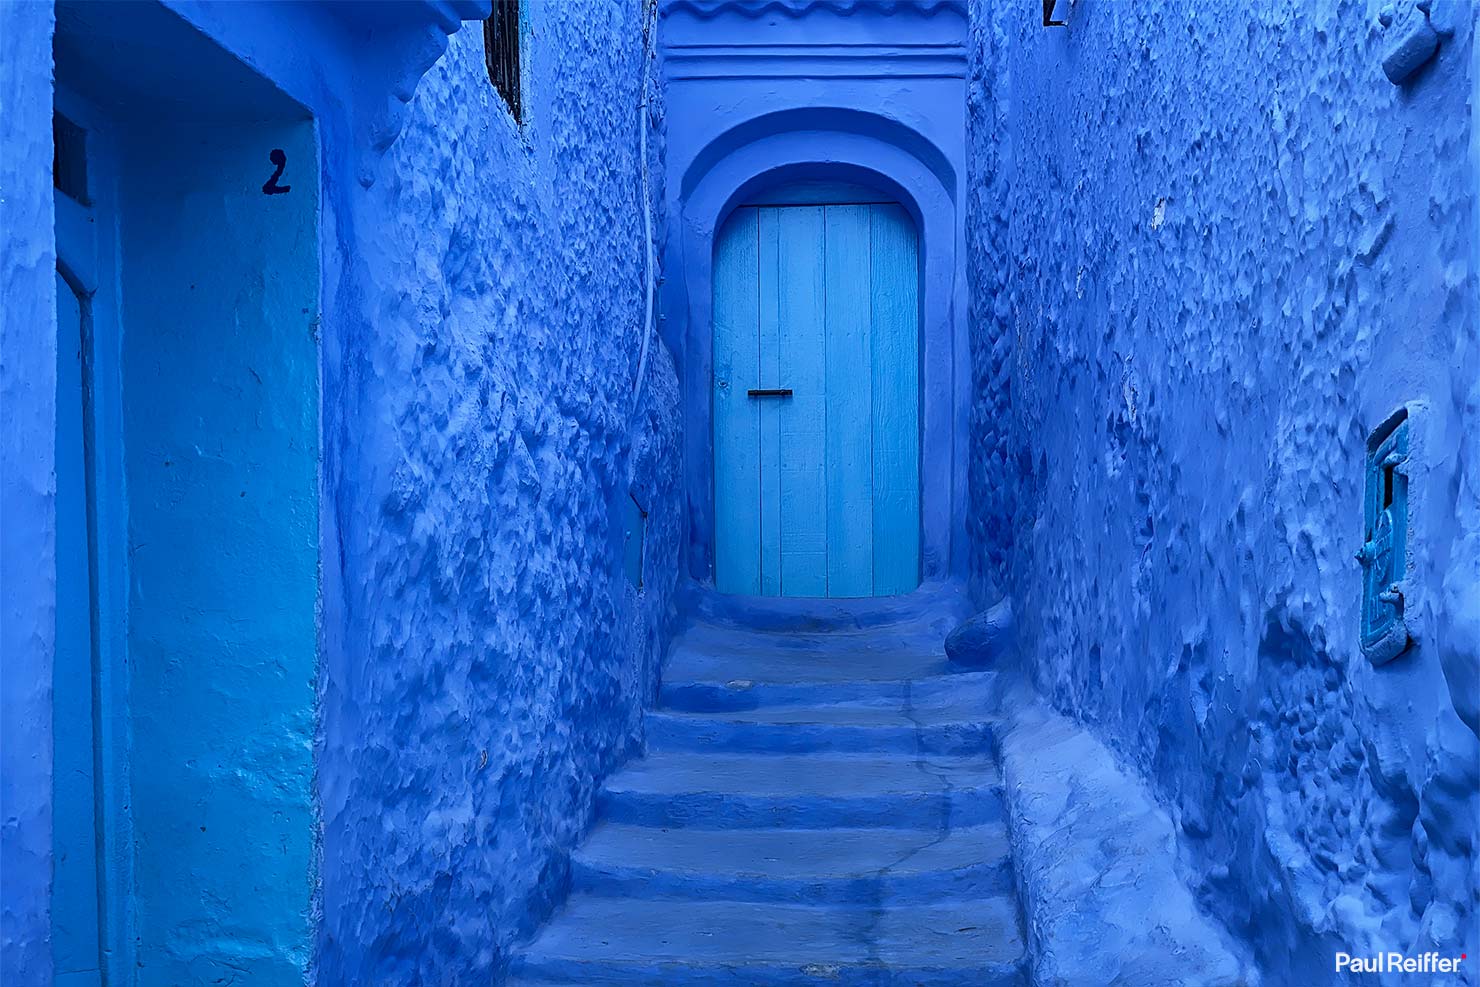 Blue Walls Door Close Up Painted Doors Steps City Visit Chefchaouen Morocco Chaouen Empty Street Scenes Paul Reiffer Photographer iPhone Travel Apple Landscape Photography